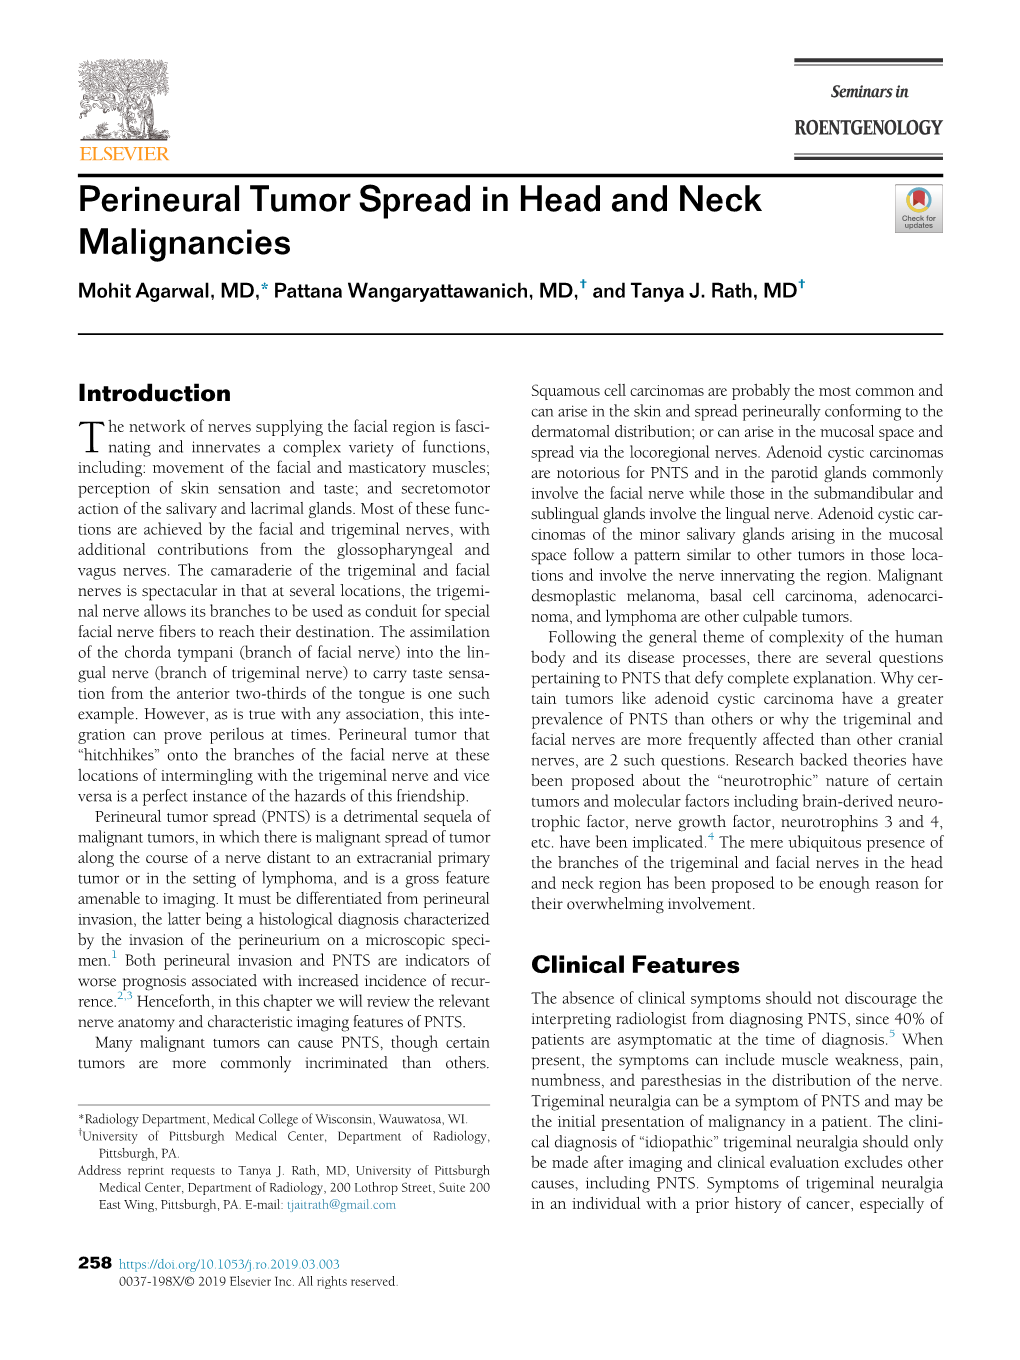 Perineural Tumor Spread in Head and Neck Malignancies Mohit Agarwal, MD,* Pattana Wangaryattawanich, MD,† and Tanya J